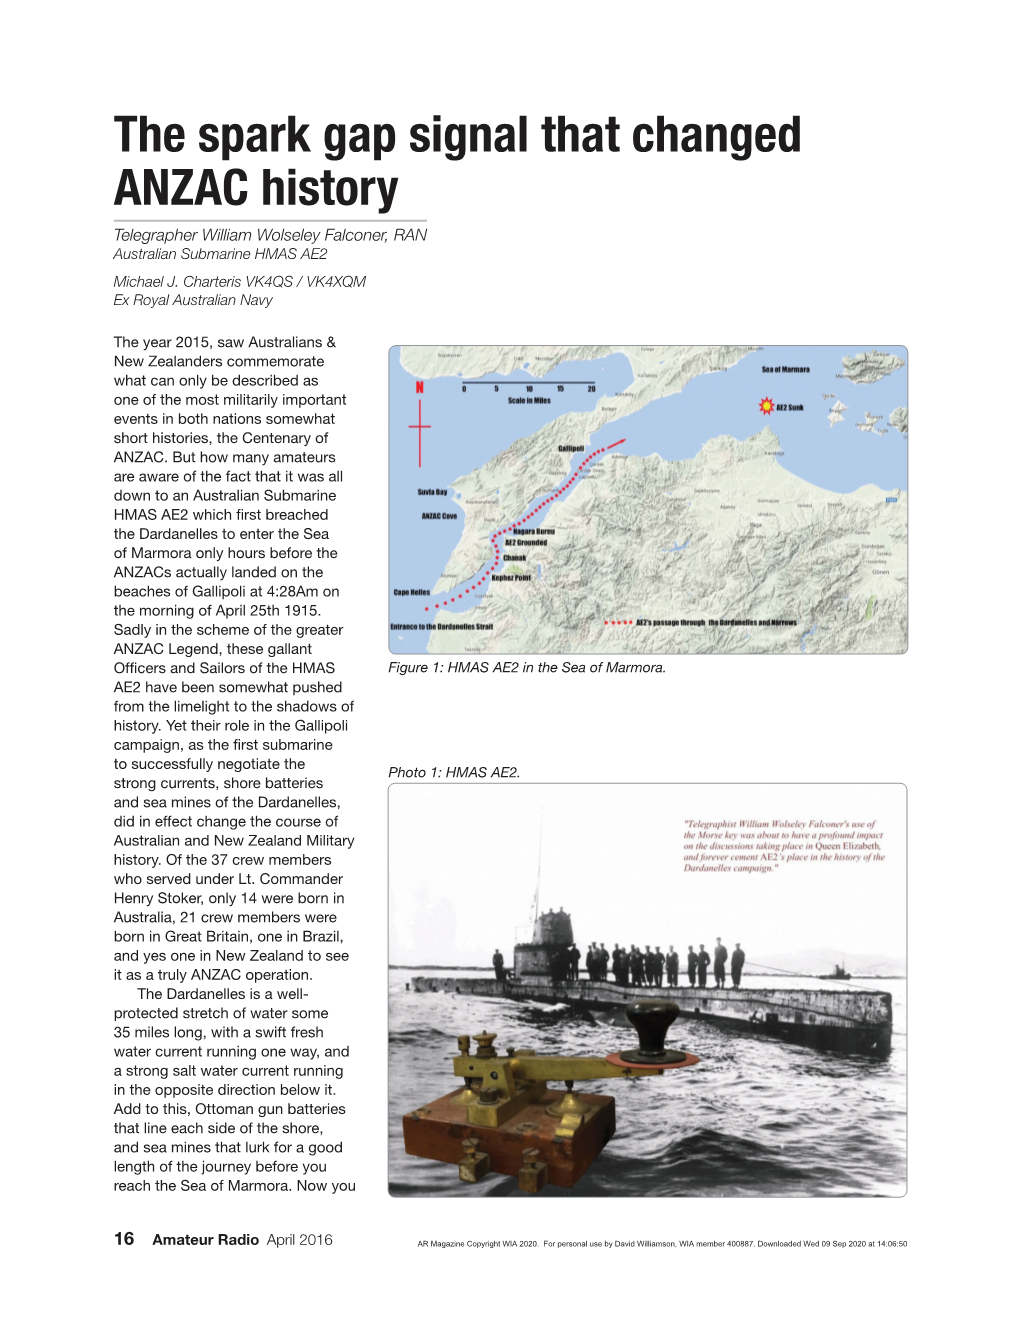 The Spark Gap Signal That Changed ANZAC History Telegrapher William Wolseley Falconer, RAN Australian Submarine HMAS AE2 Michael J